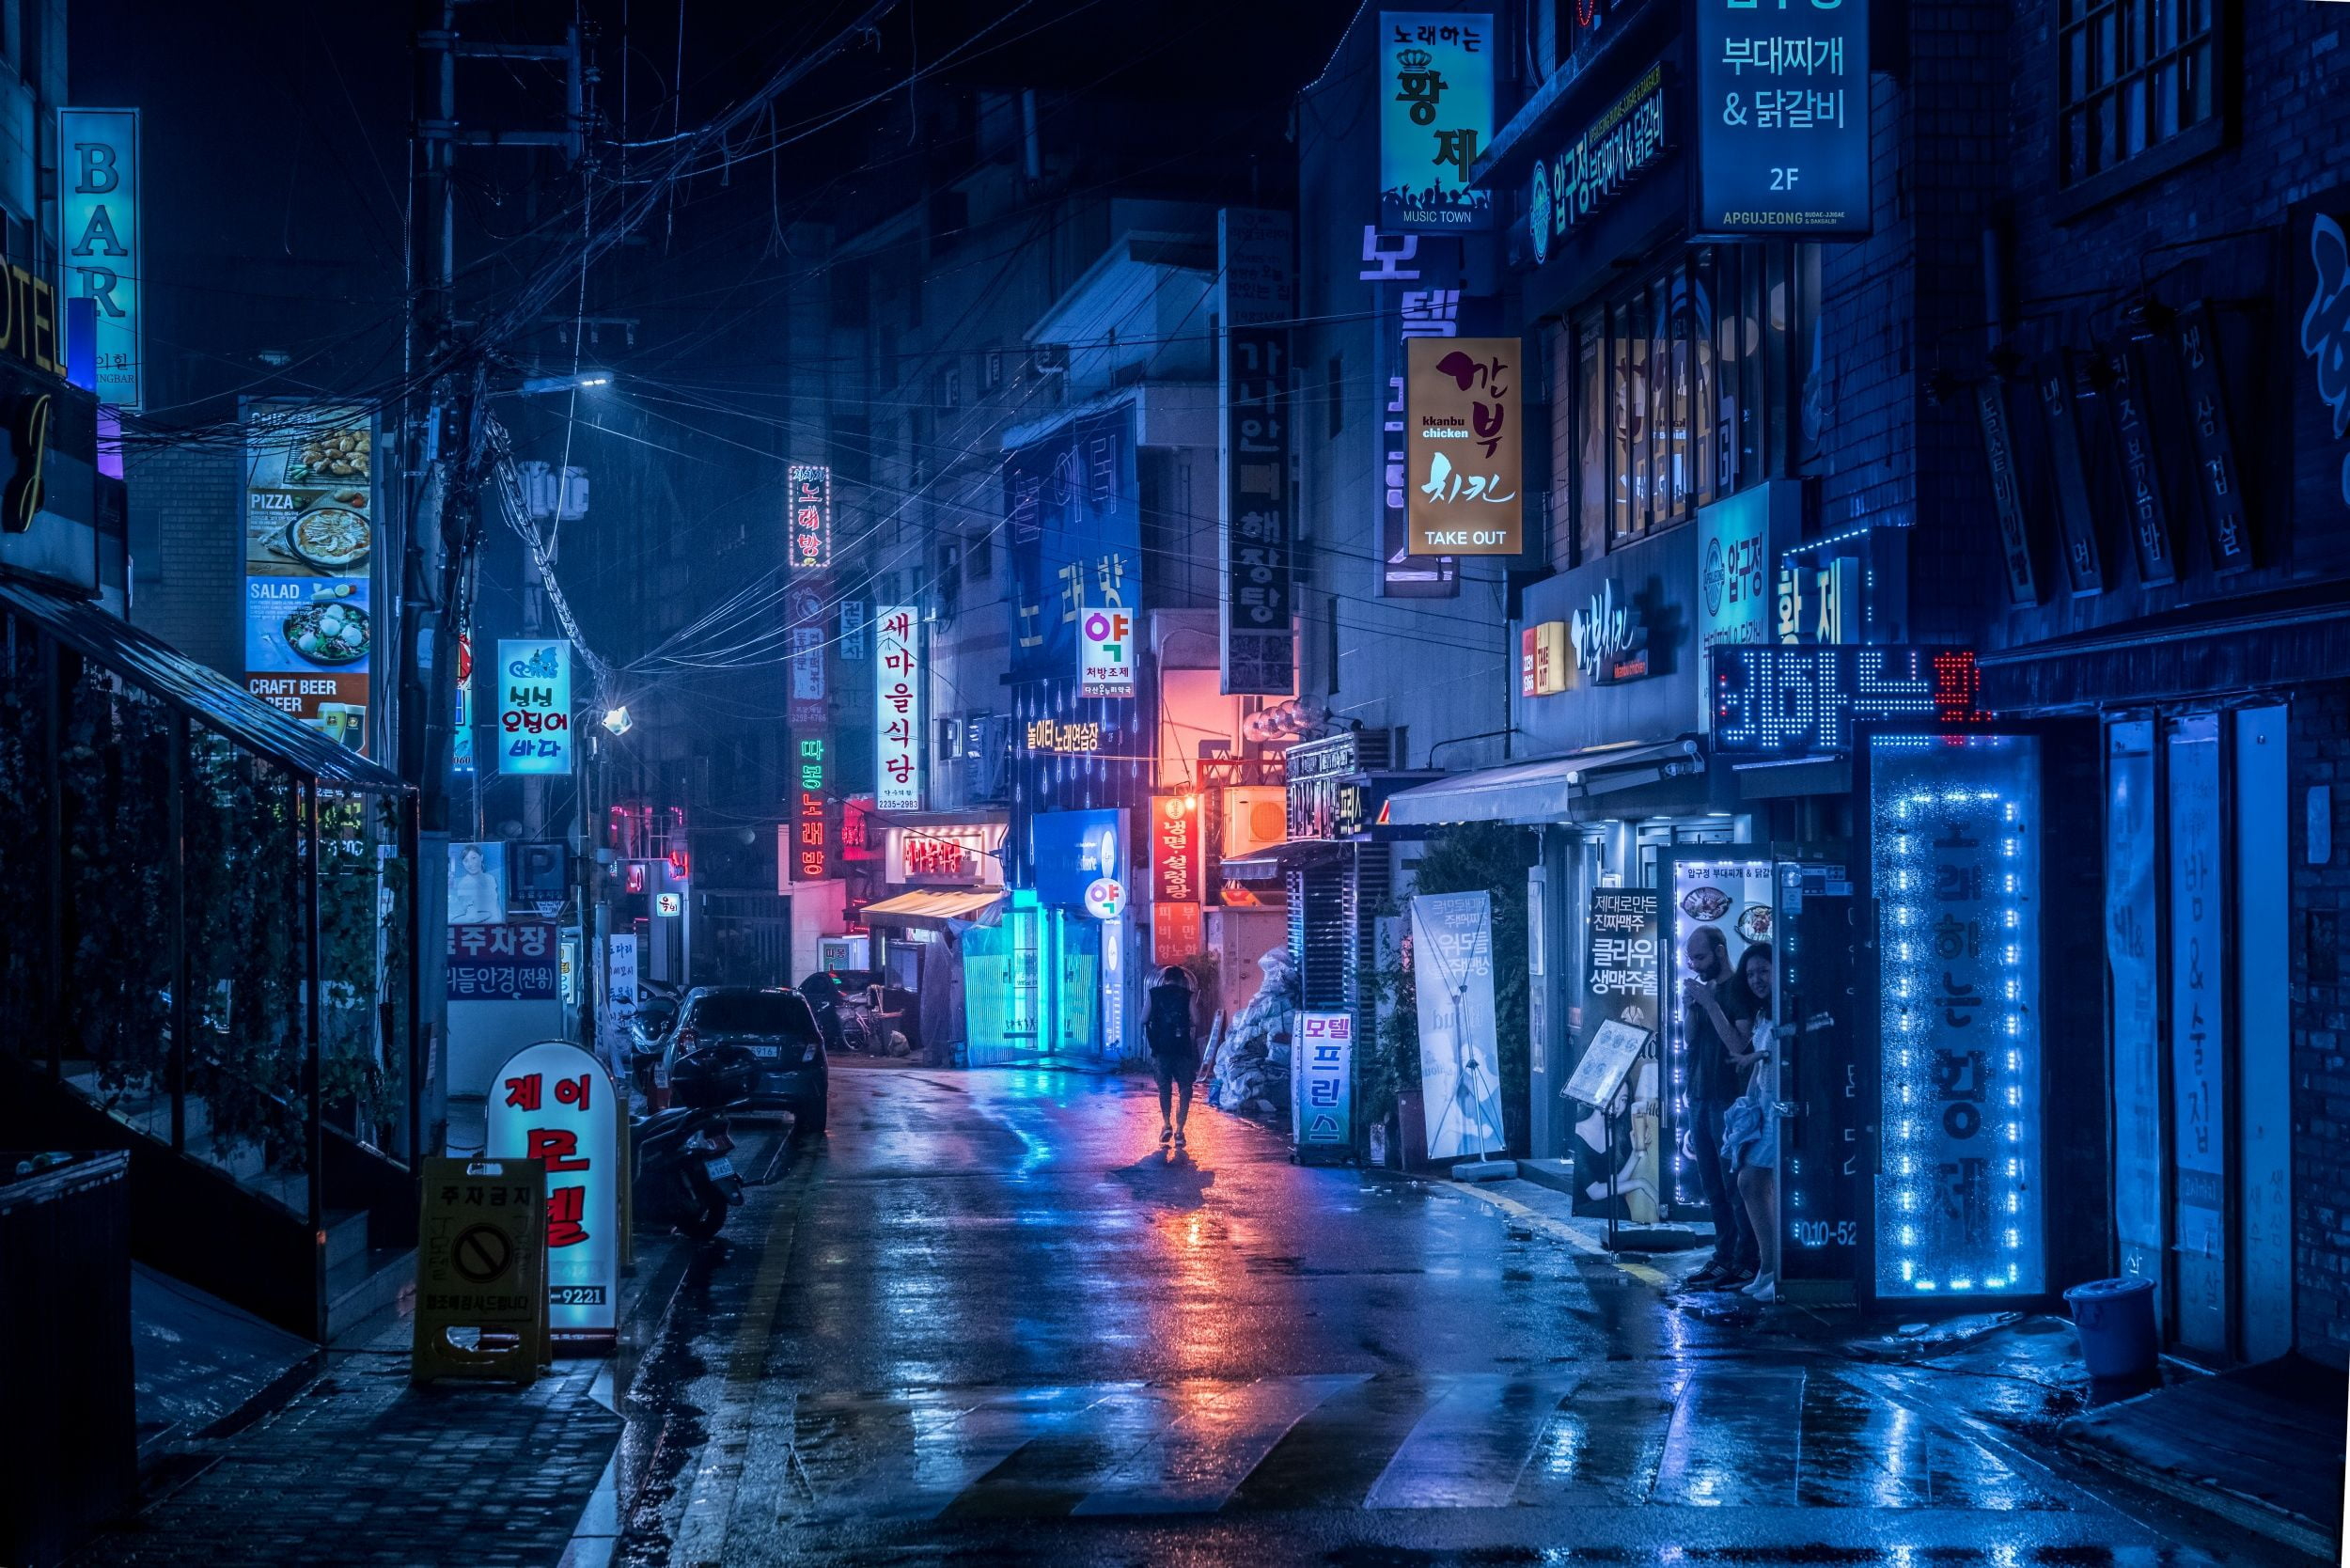 A man walks down a neon-lit street in Seoul, South Korea. - Anime city